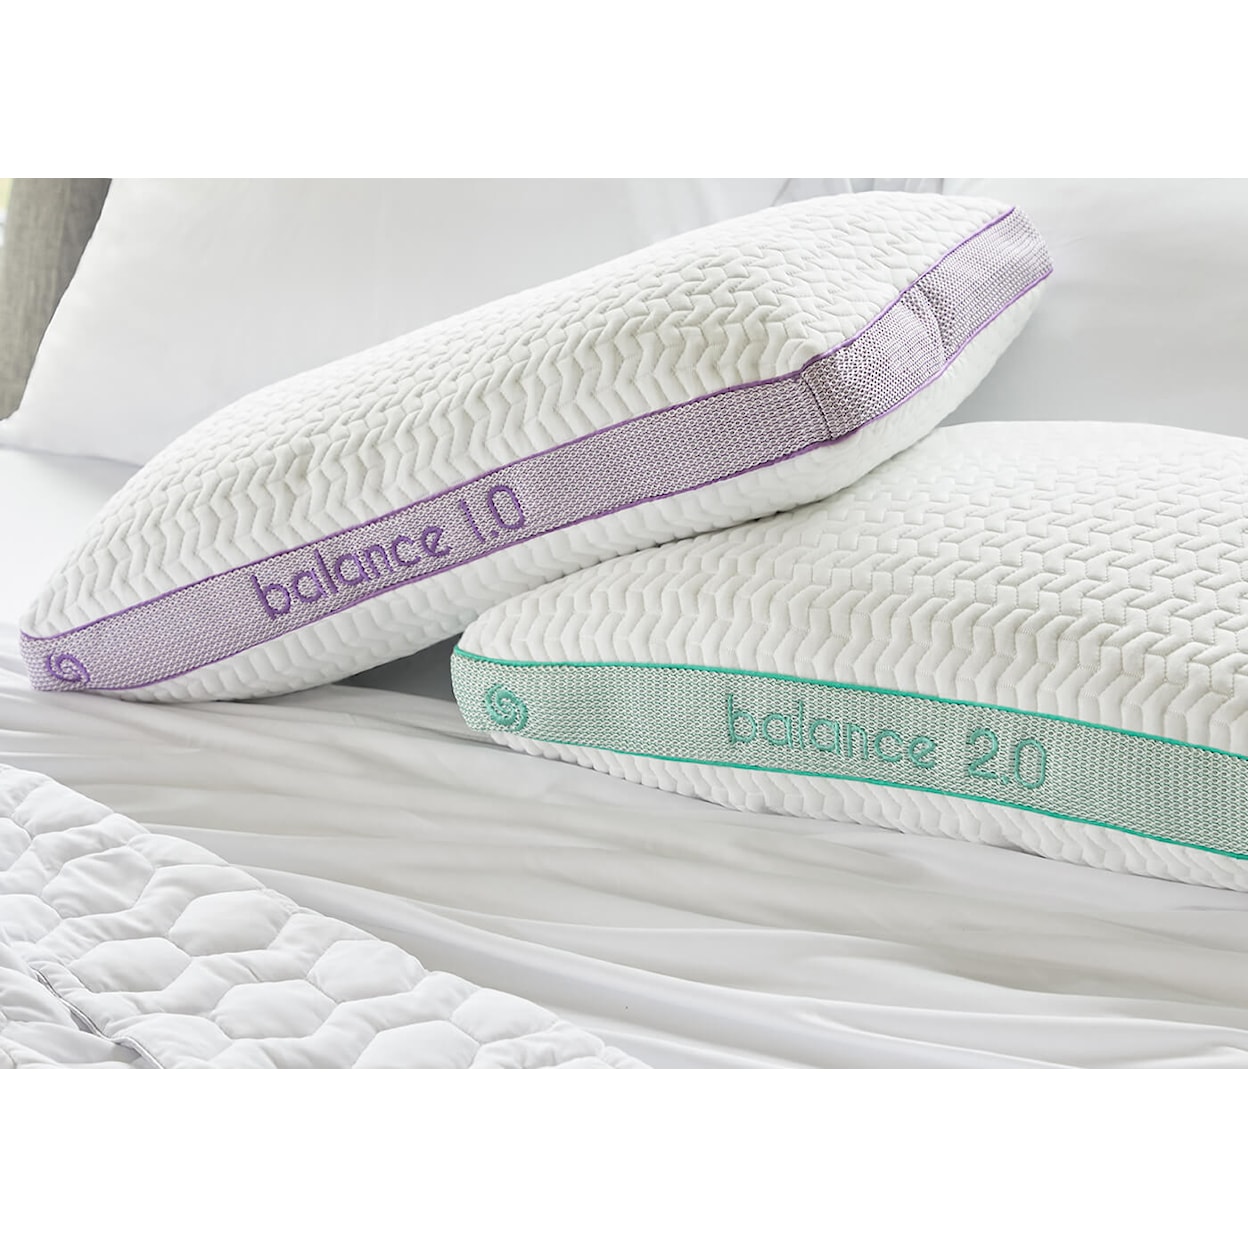 Bedgear Balance Balance Pillow Size 1.0